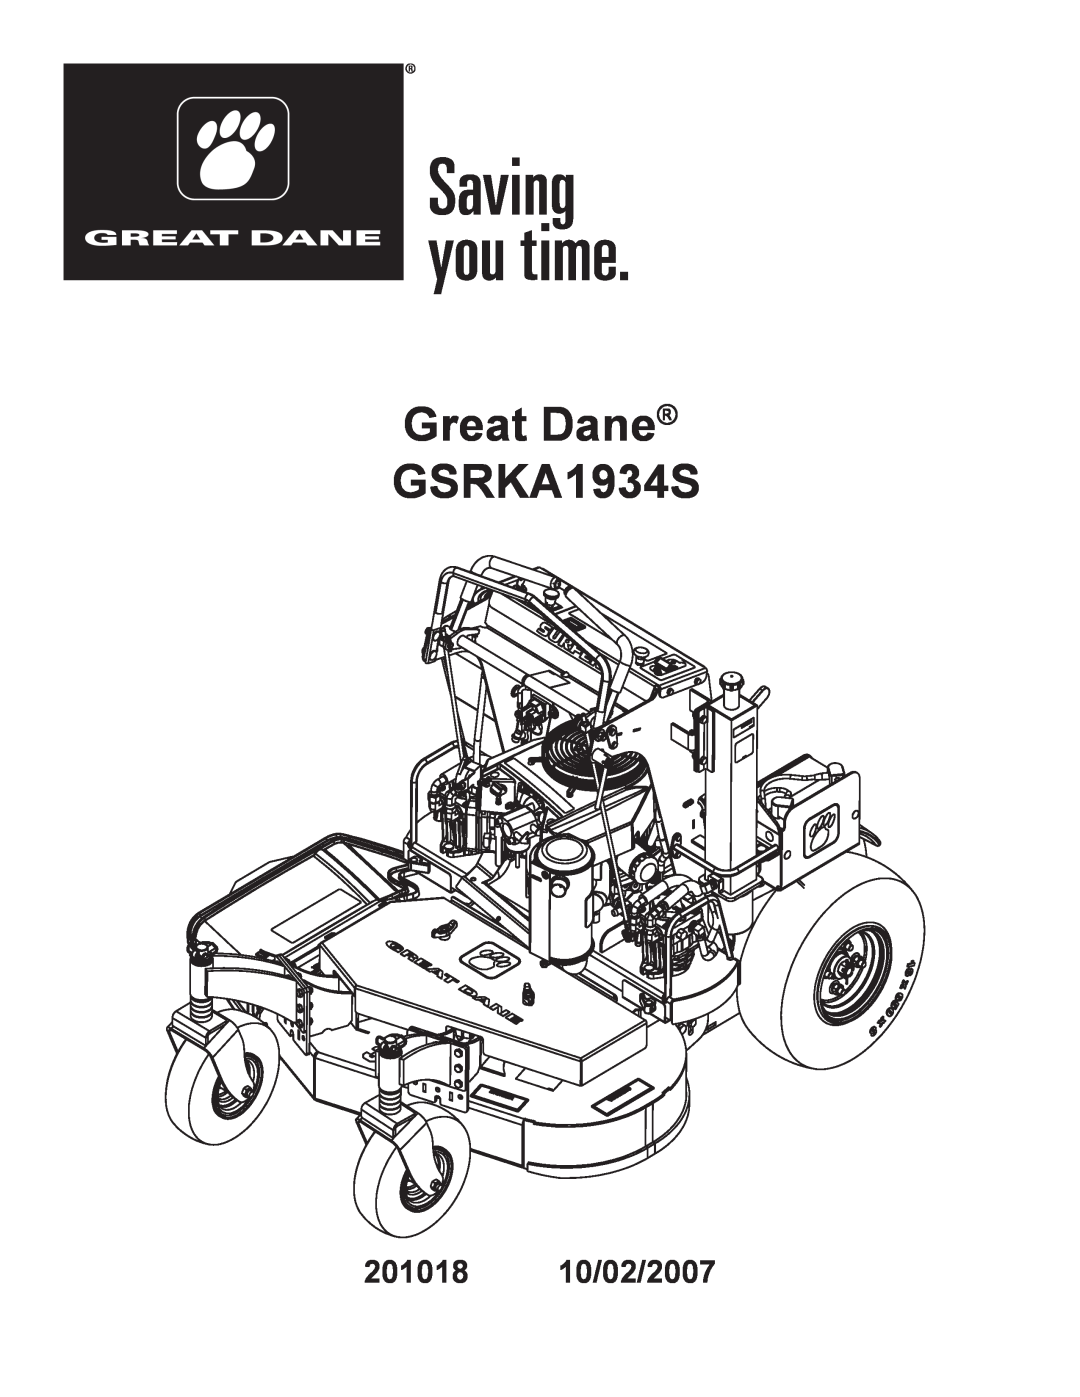 Great Dane manual Great Dane GSRKA1934S, 201018 10/02/2007 